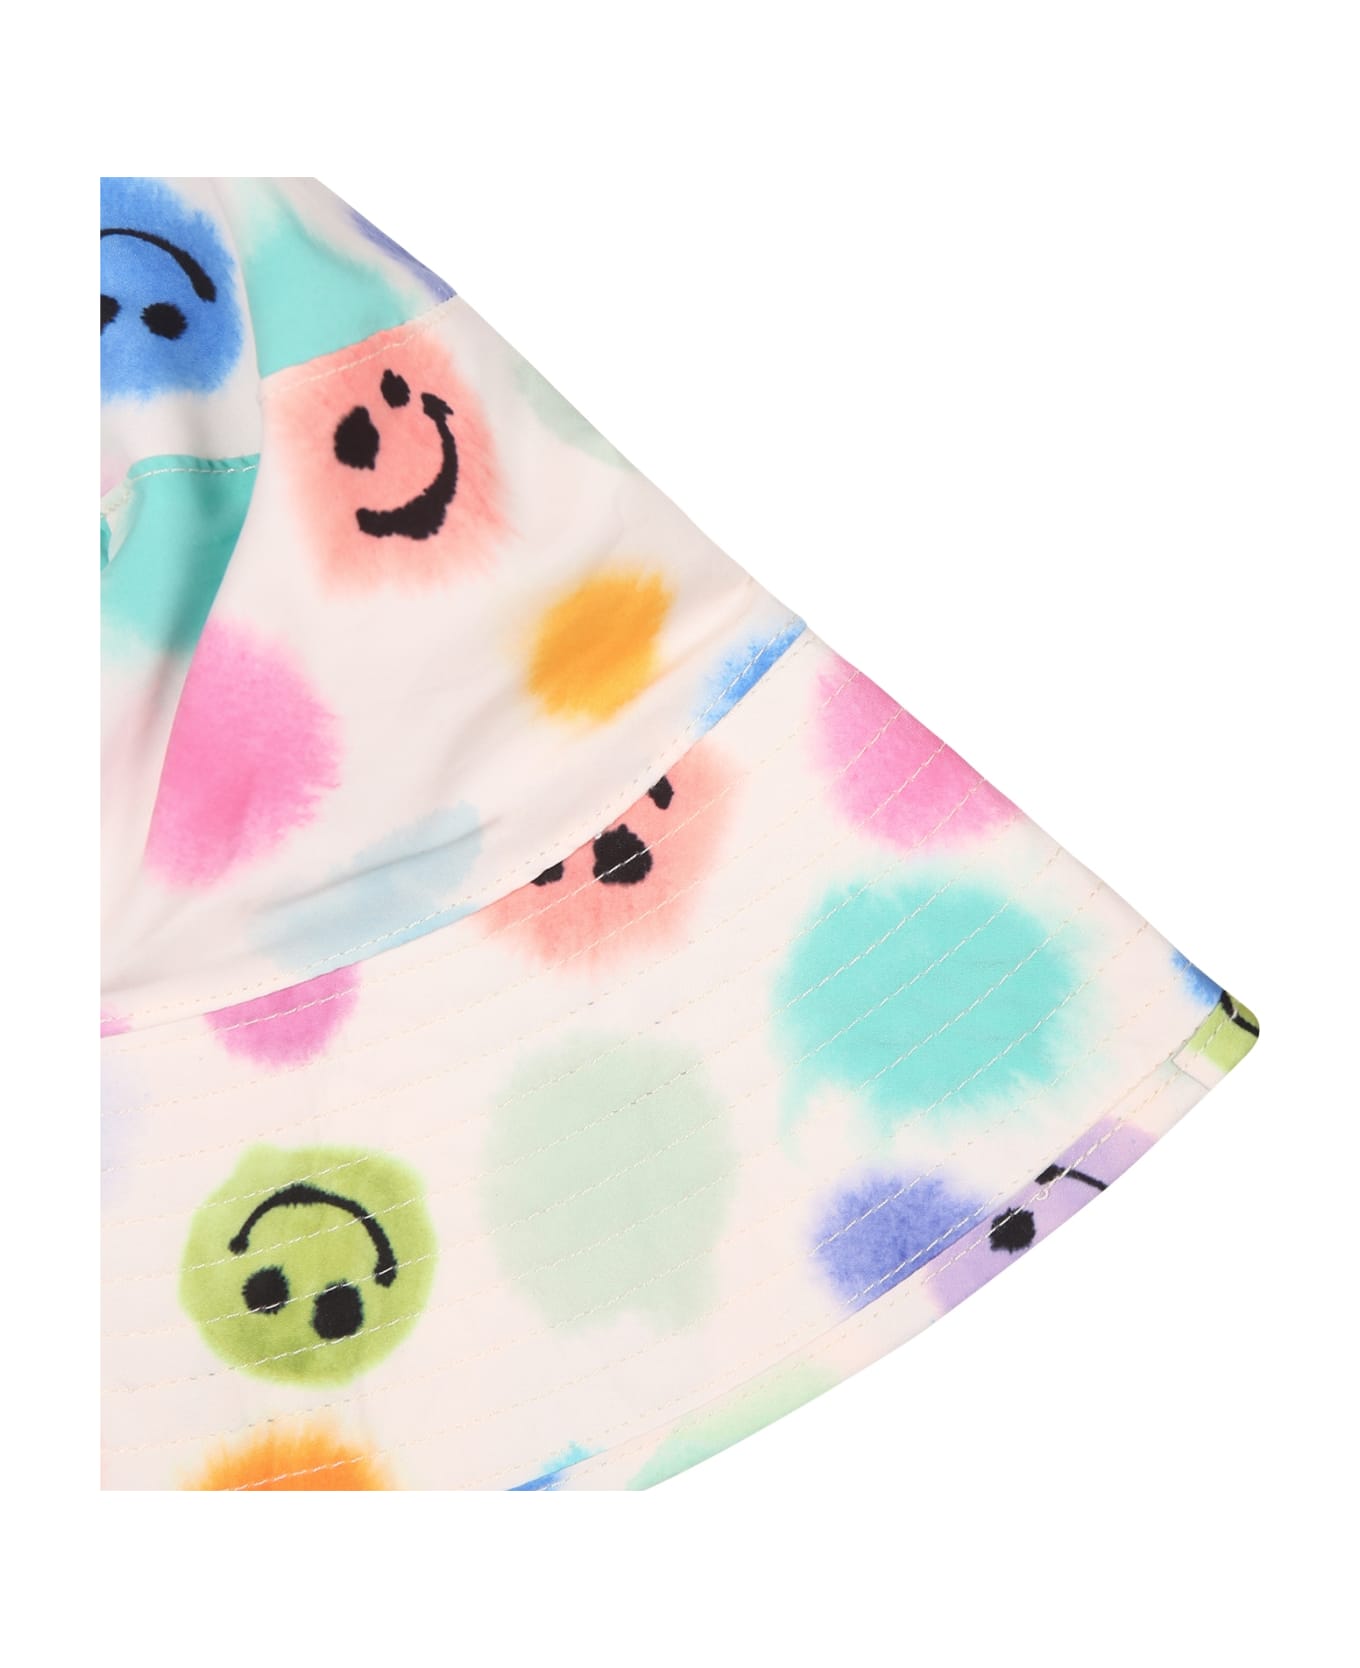 Molo White Cloche For Babykids With Smiley - Multicolor